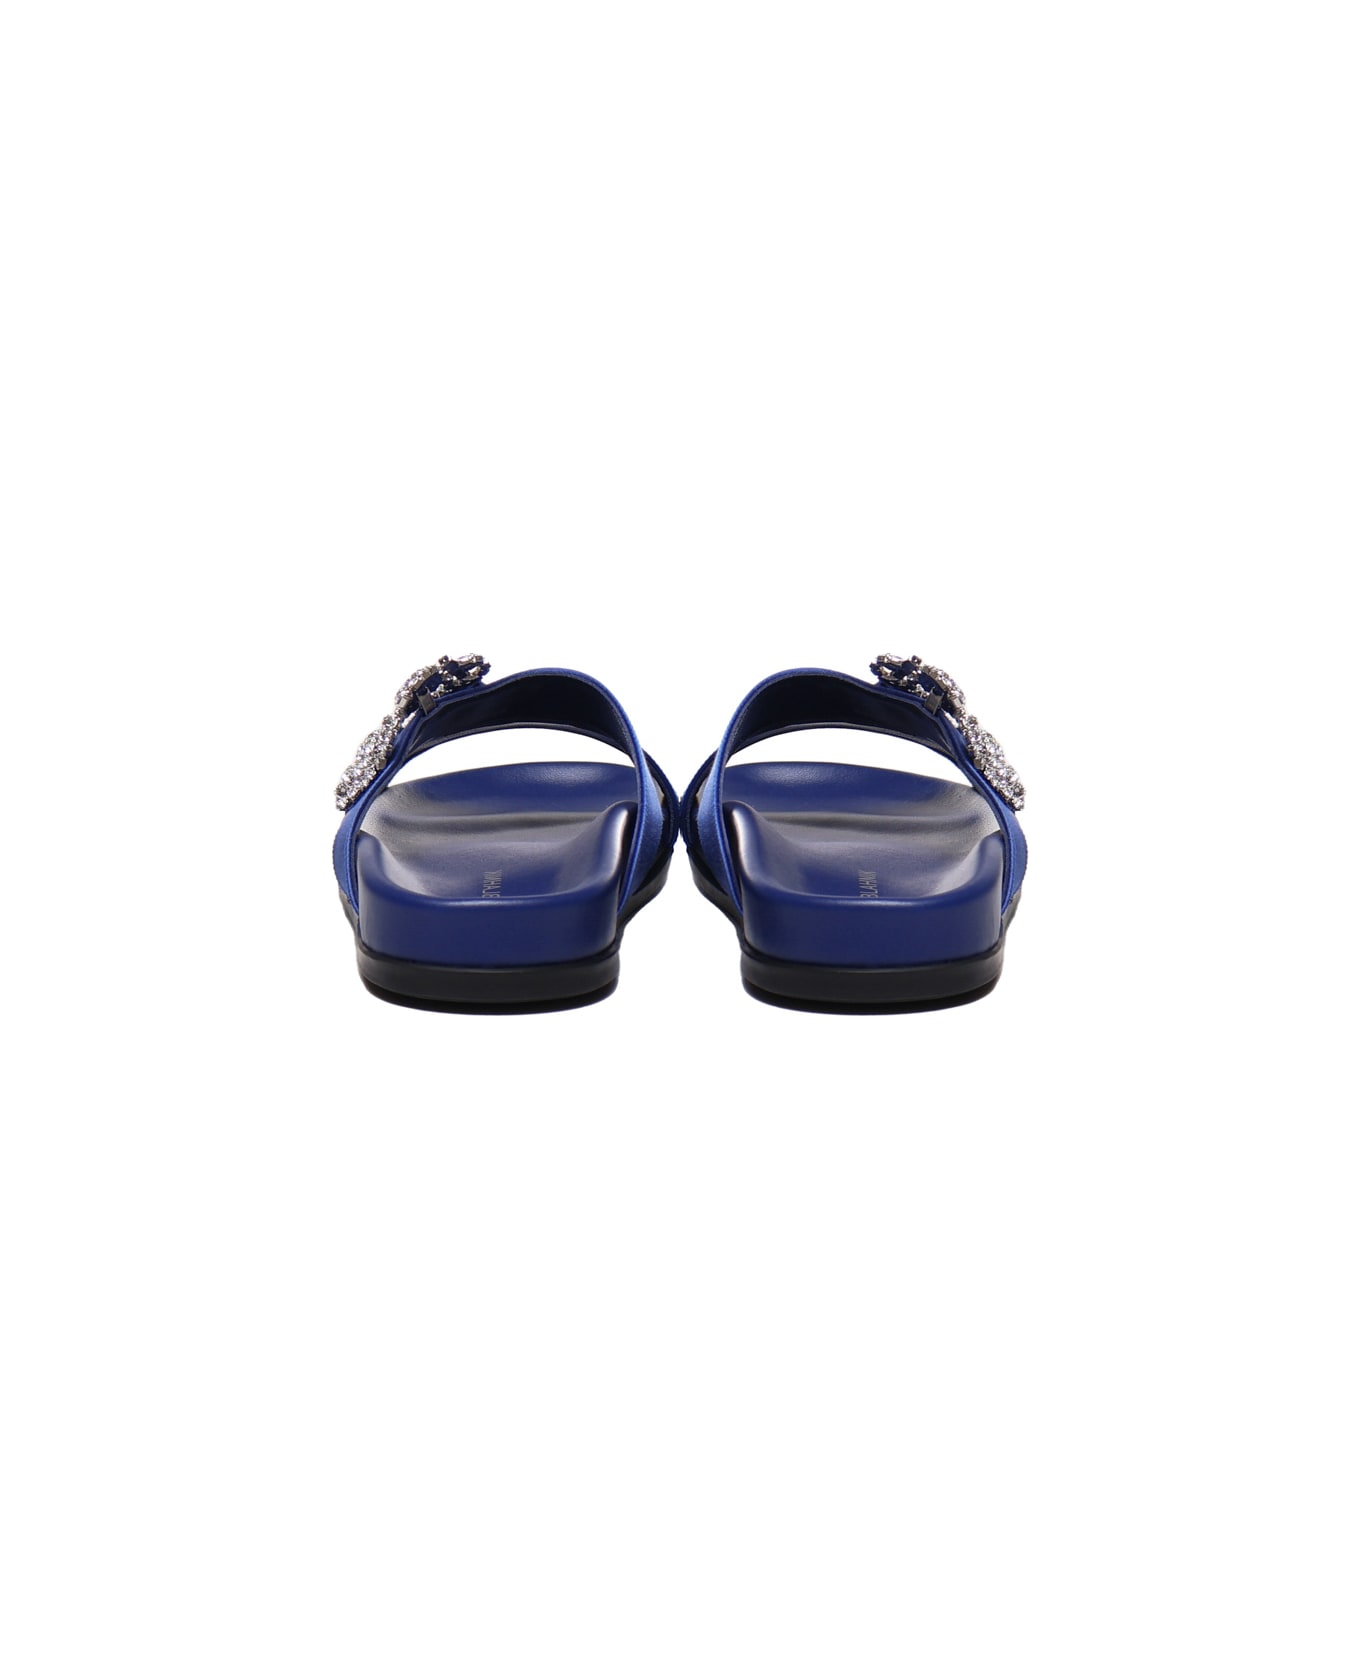 Manolo Blahnik Chilanghi Flat Sandals - Blue satin 